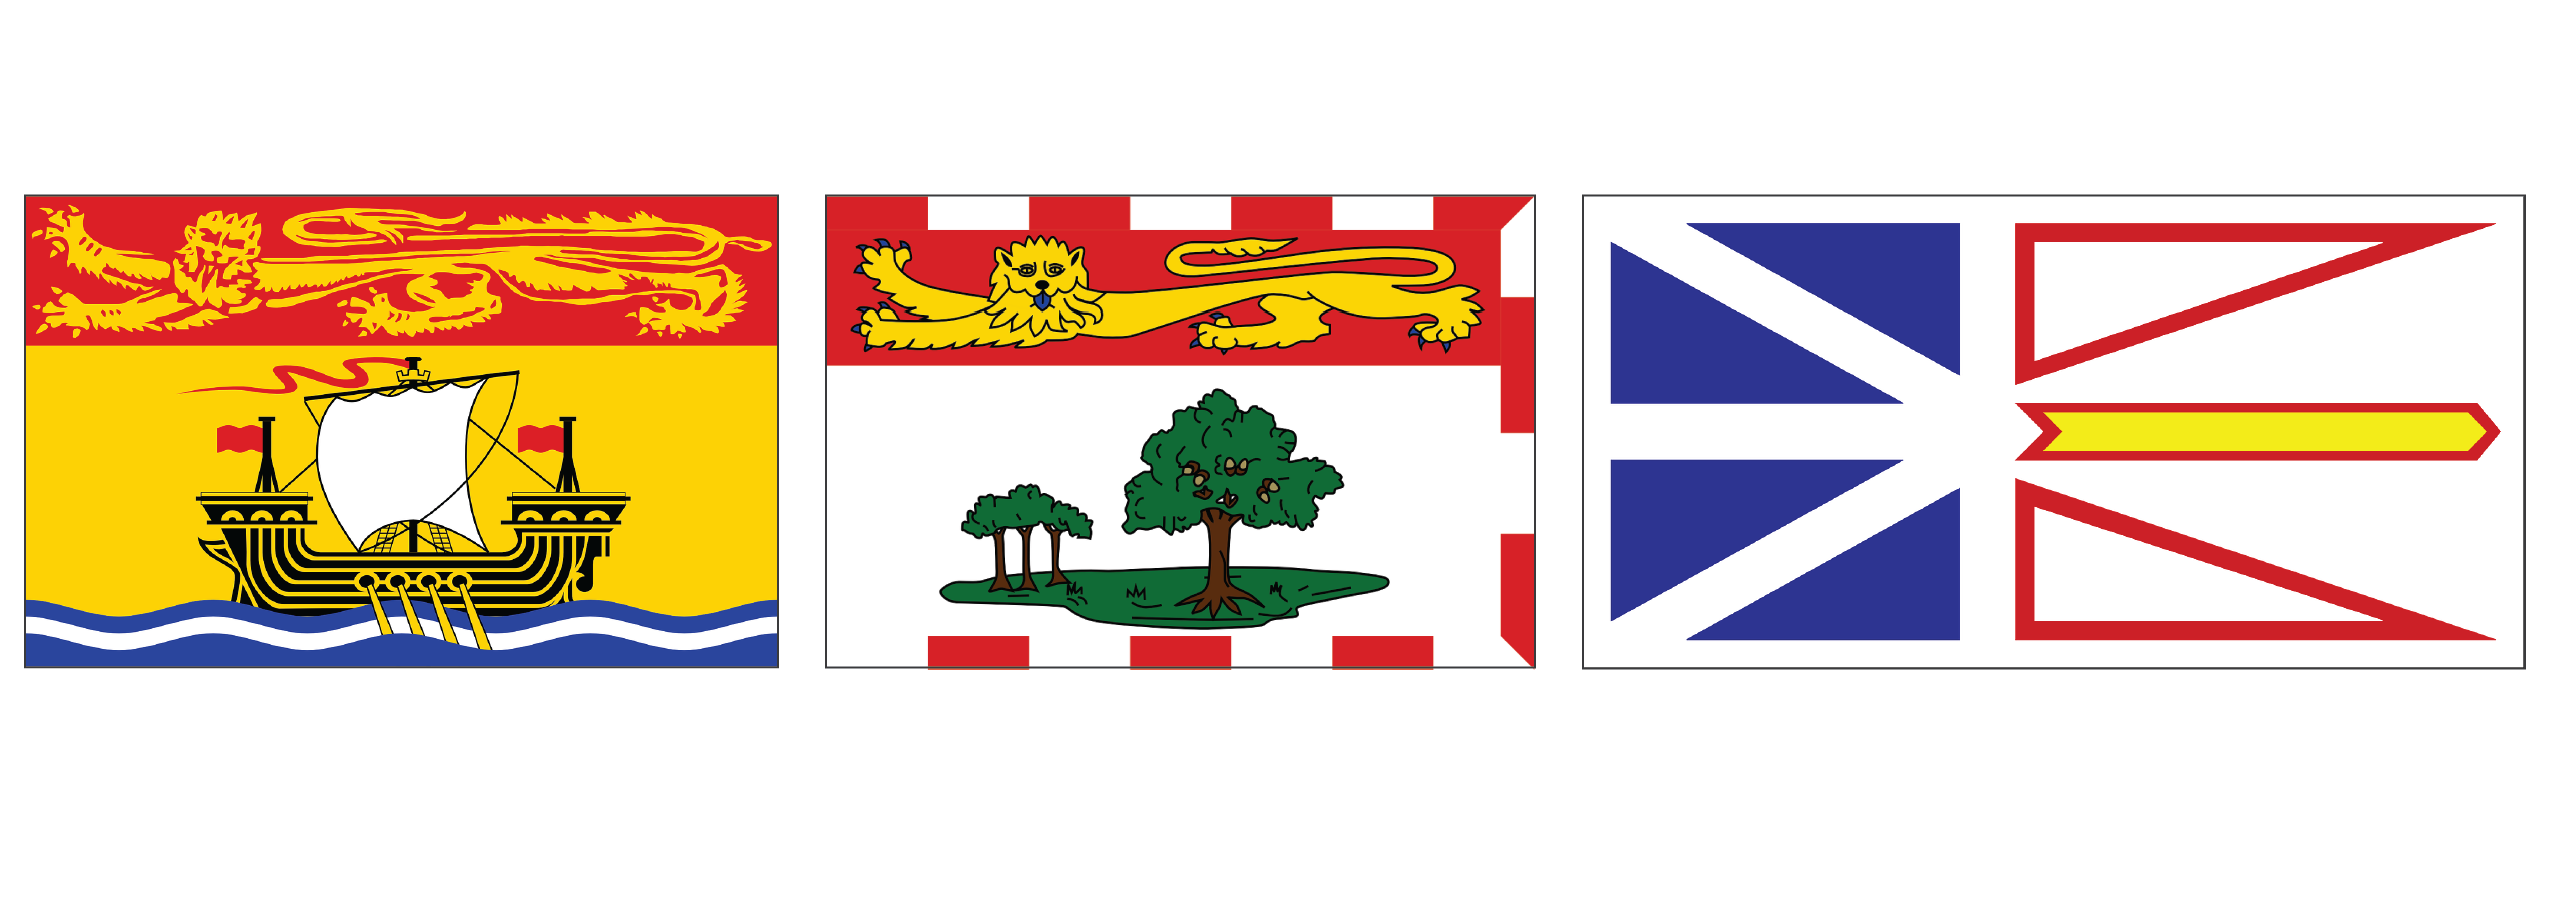 Provincial flags of New Brunswick, Prince Edward Island, and Newfoundland and Labrador